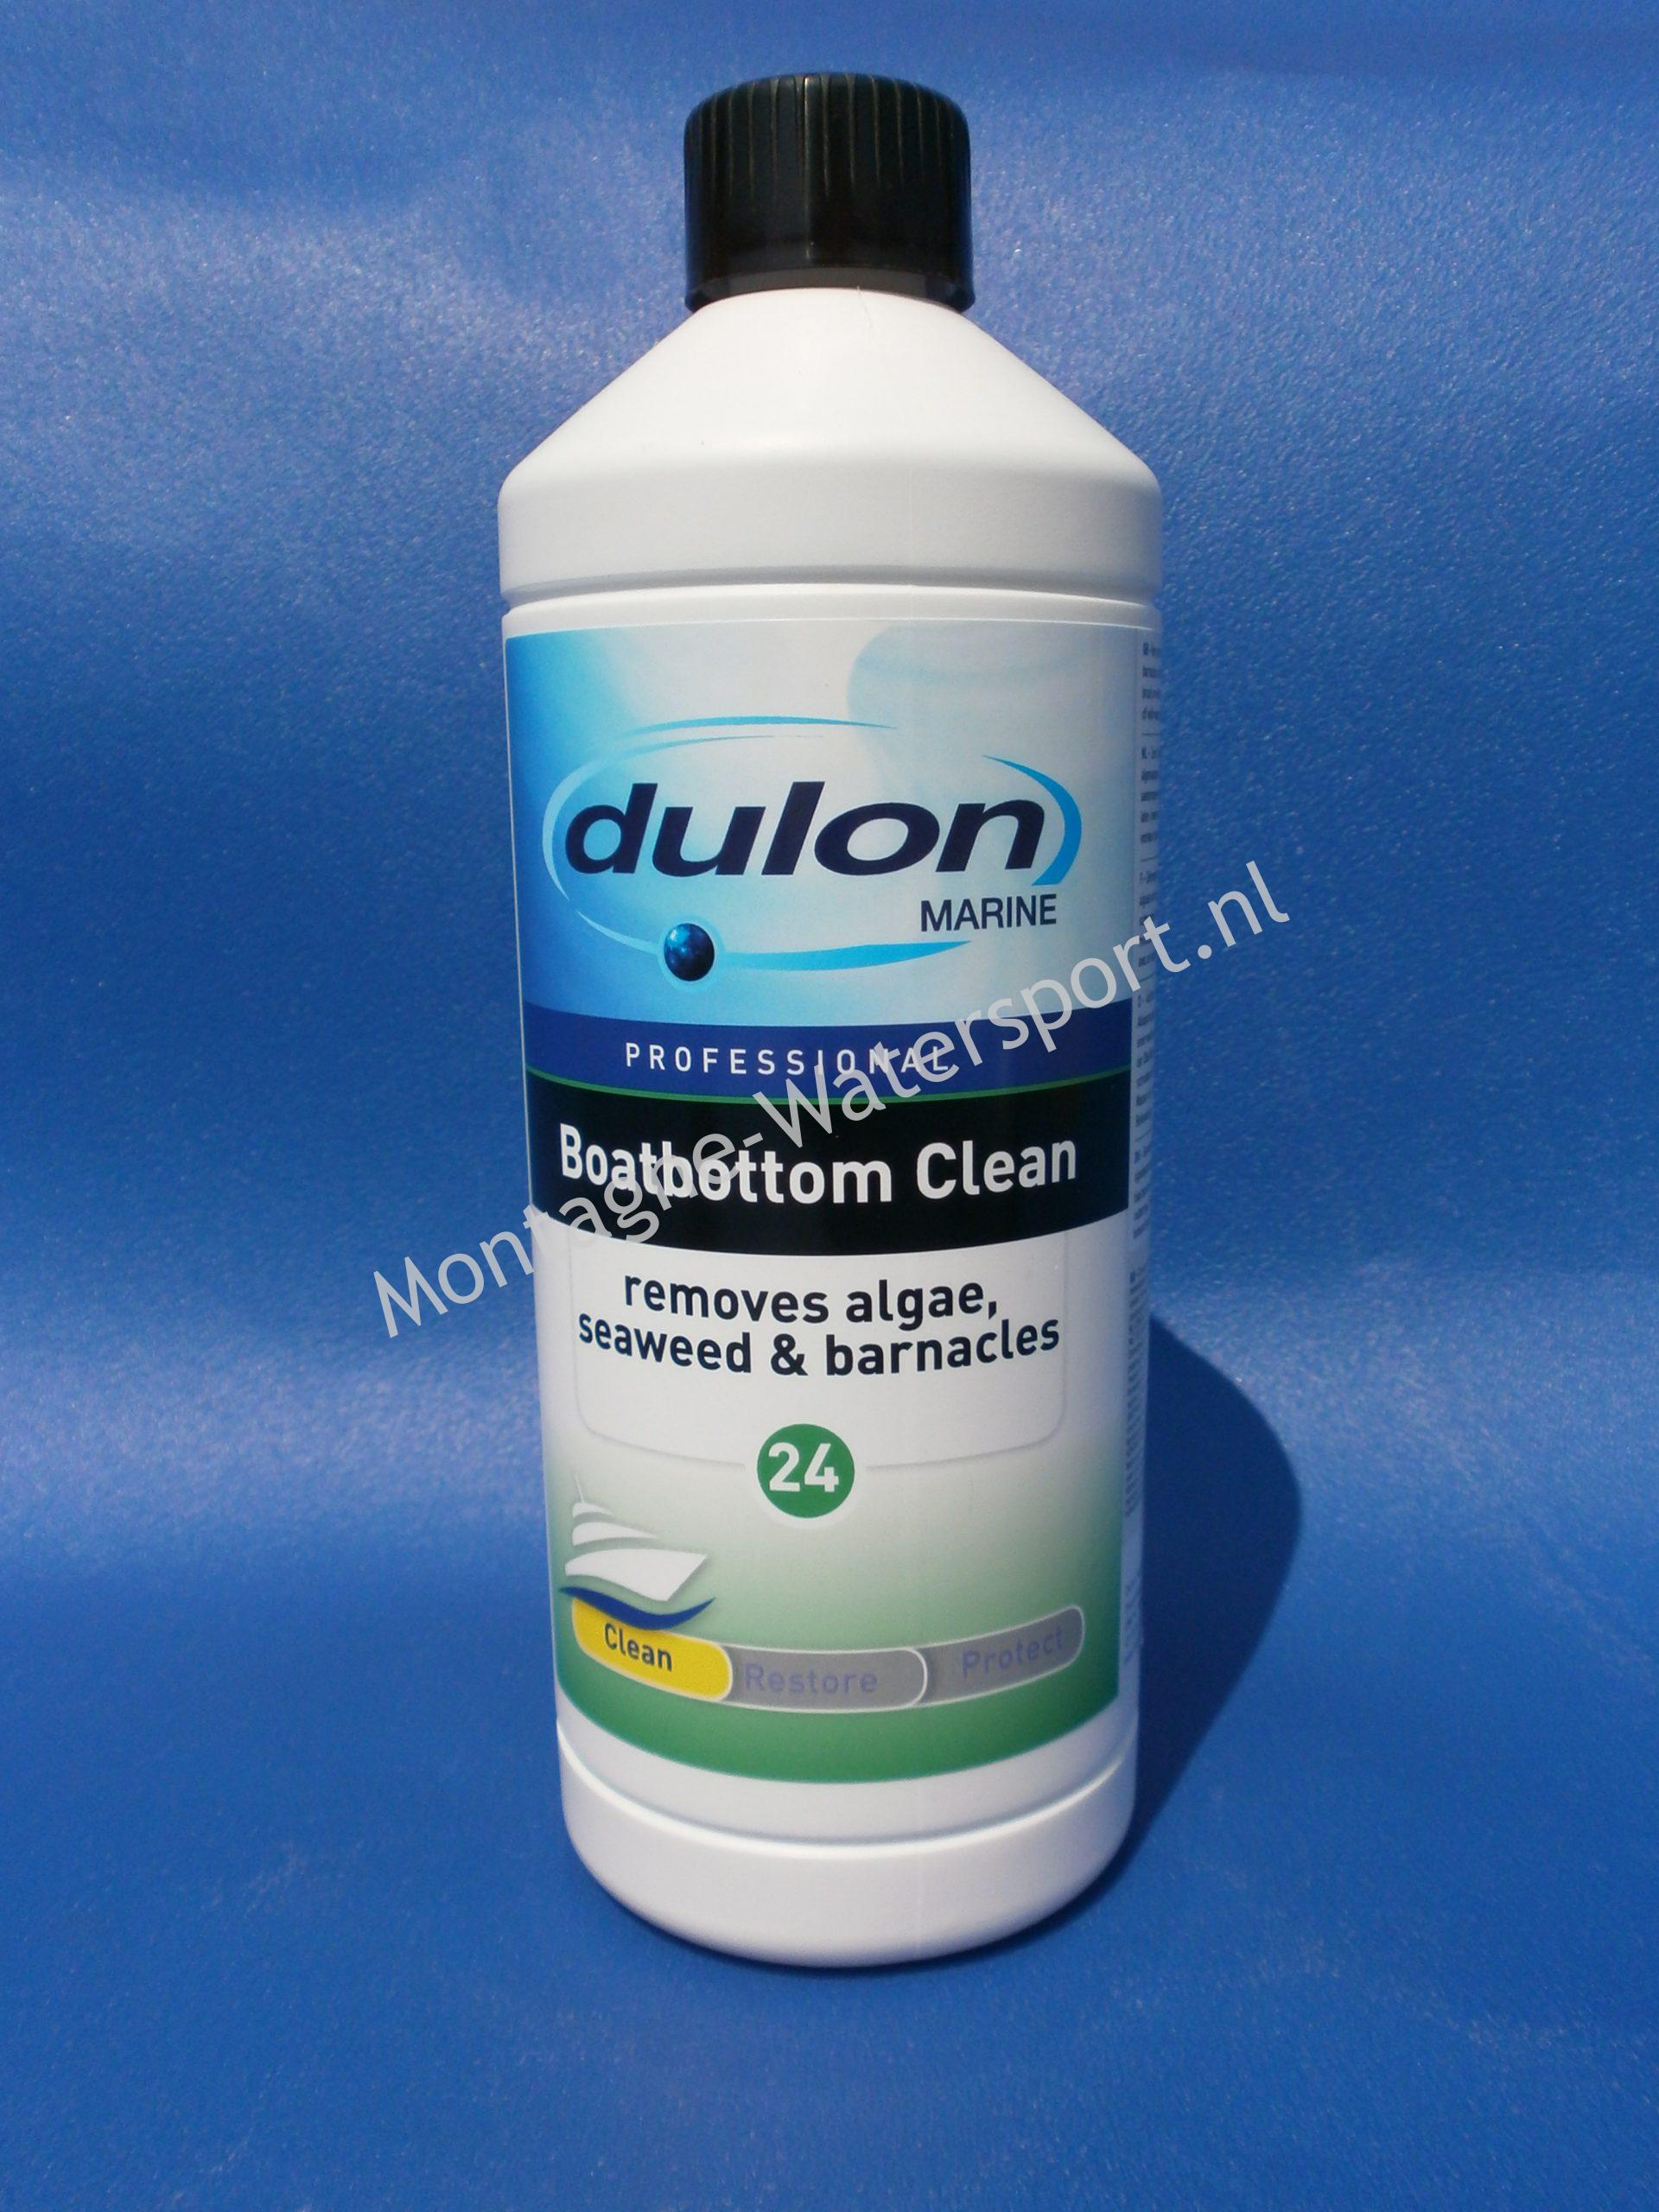 Dulon Premium Boat Wax 